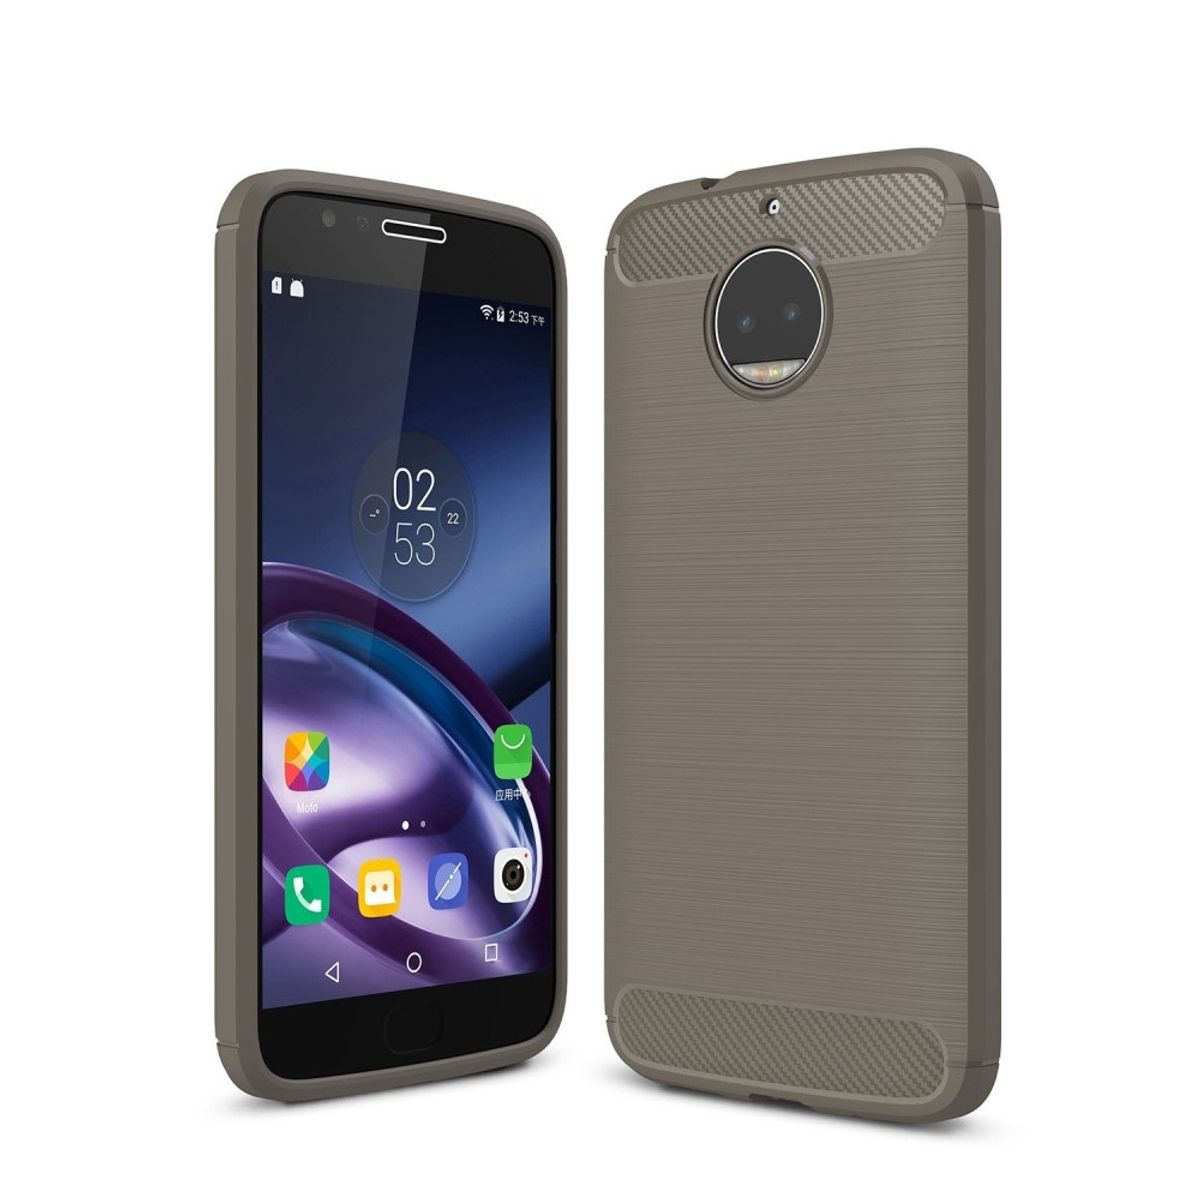 König Design Motorola Moto G5S Plus Cover TPU Case Silikon Schutz-Hülle Handy Bumper Carbon Optik Grau - Air Cushion Technology